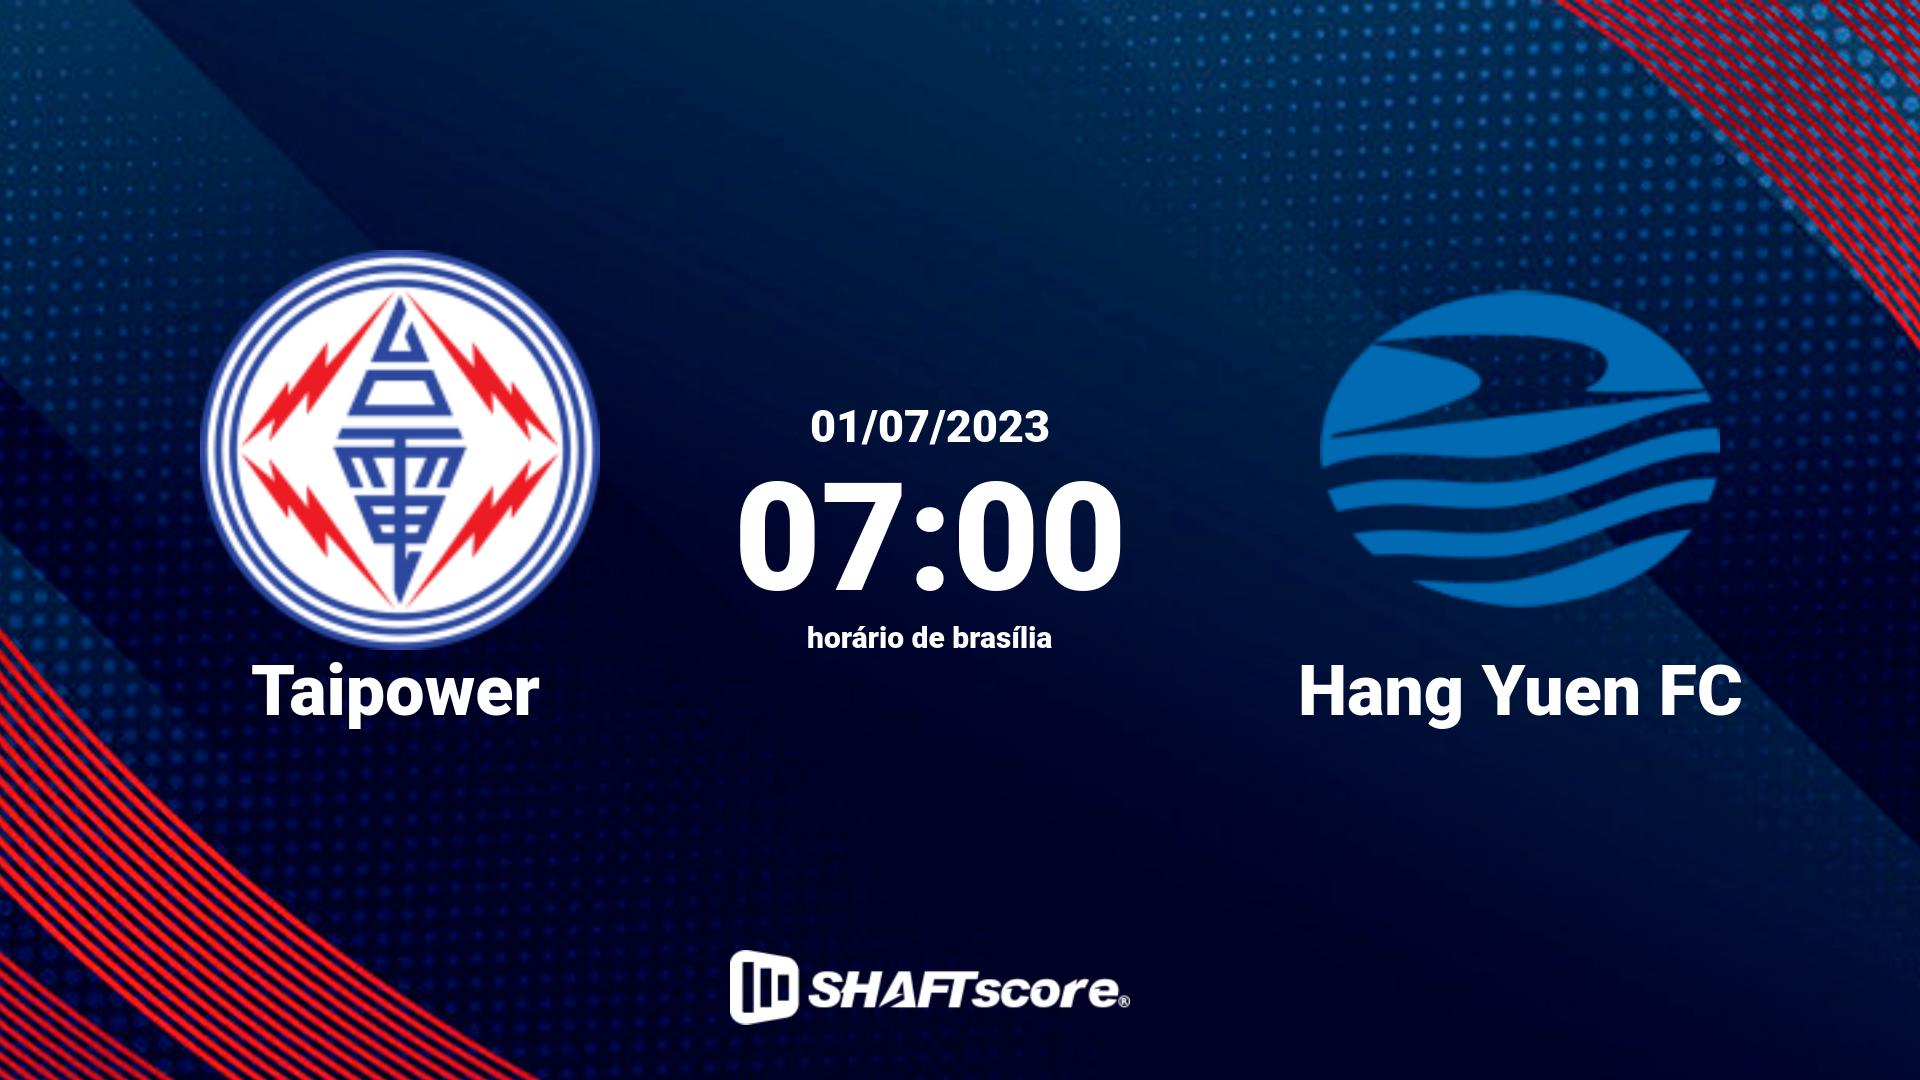 Estatísticas do jogo Taipower vs Hang Yuen FC 01.07 07:00